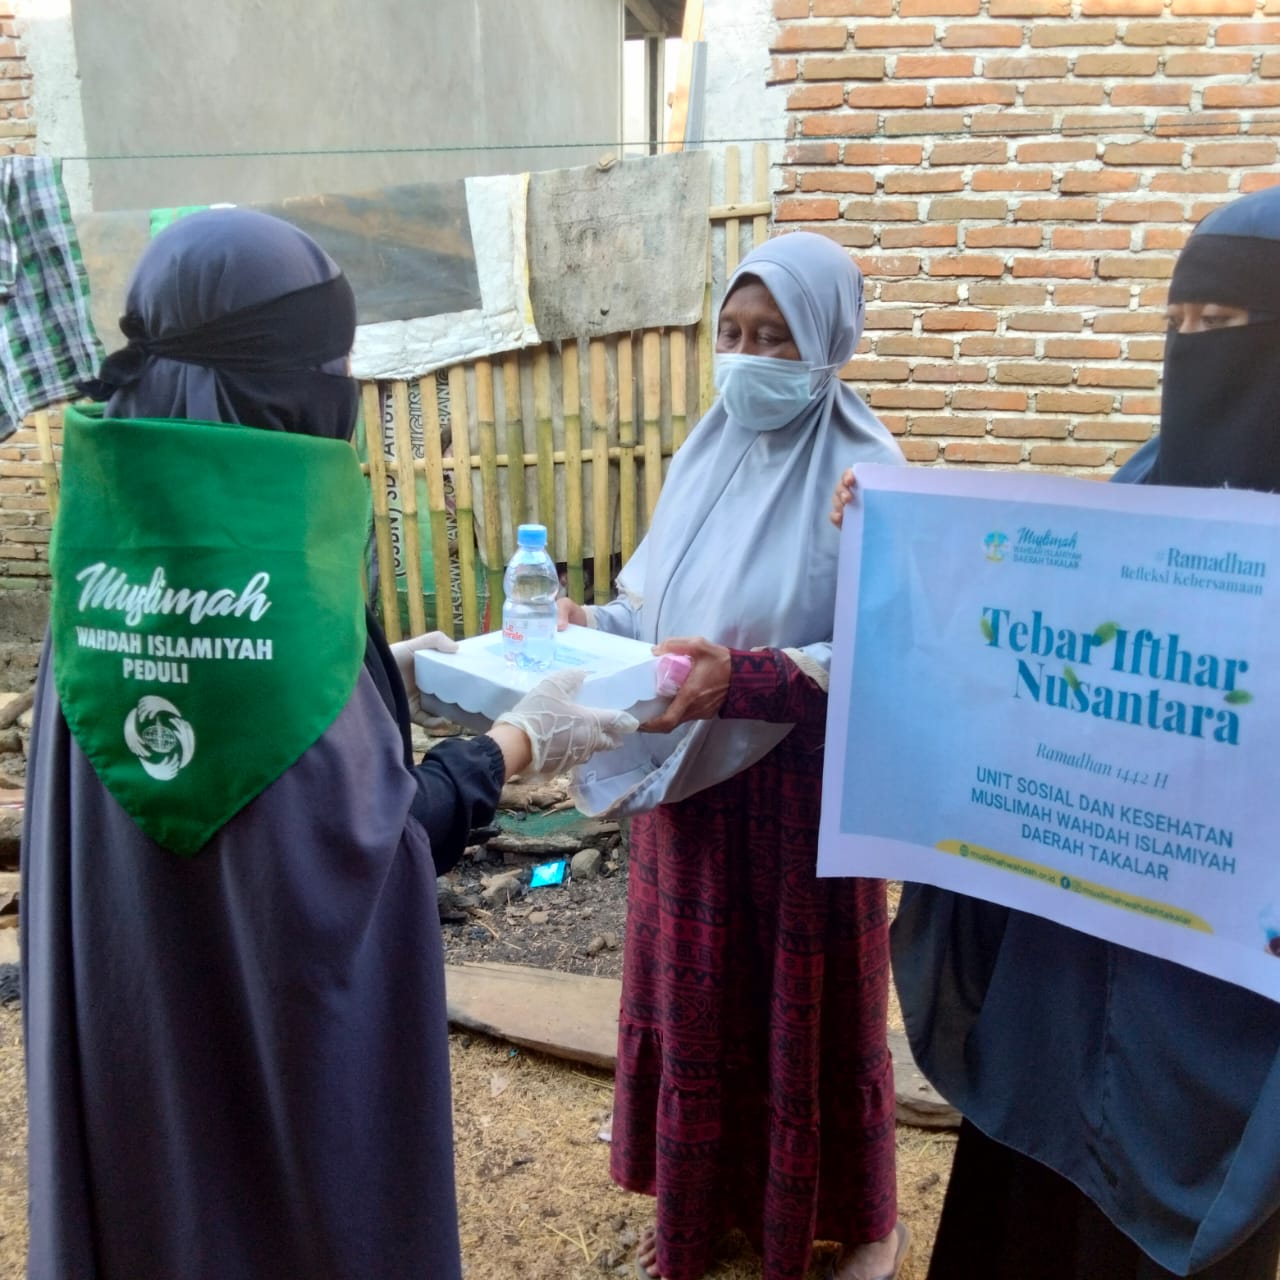 Muslimah Wahdah Islamiyah Daerah Takalar Bagikan 805 Paket Ifthar ke Masyarakat